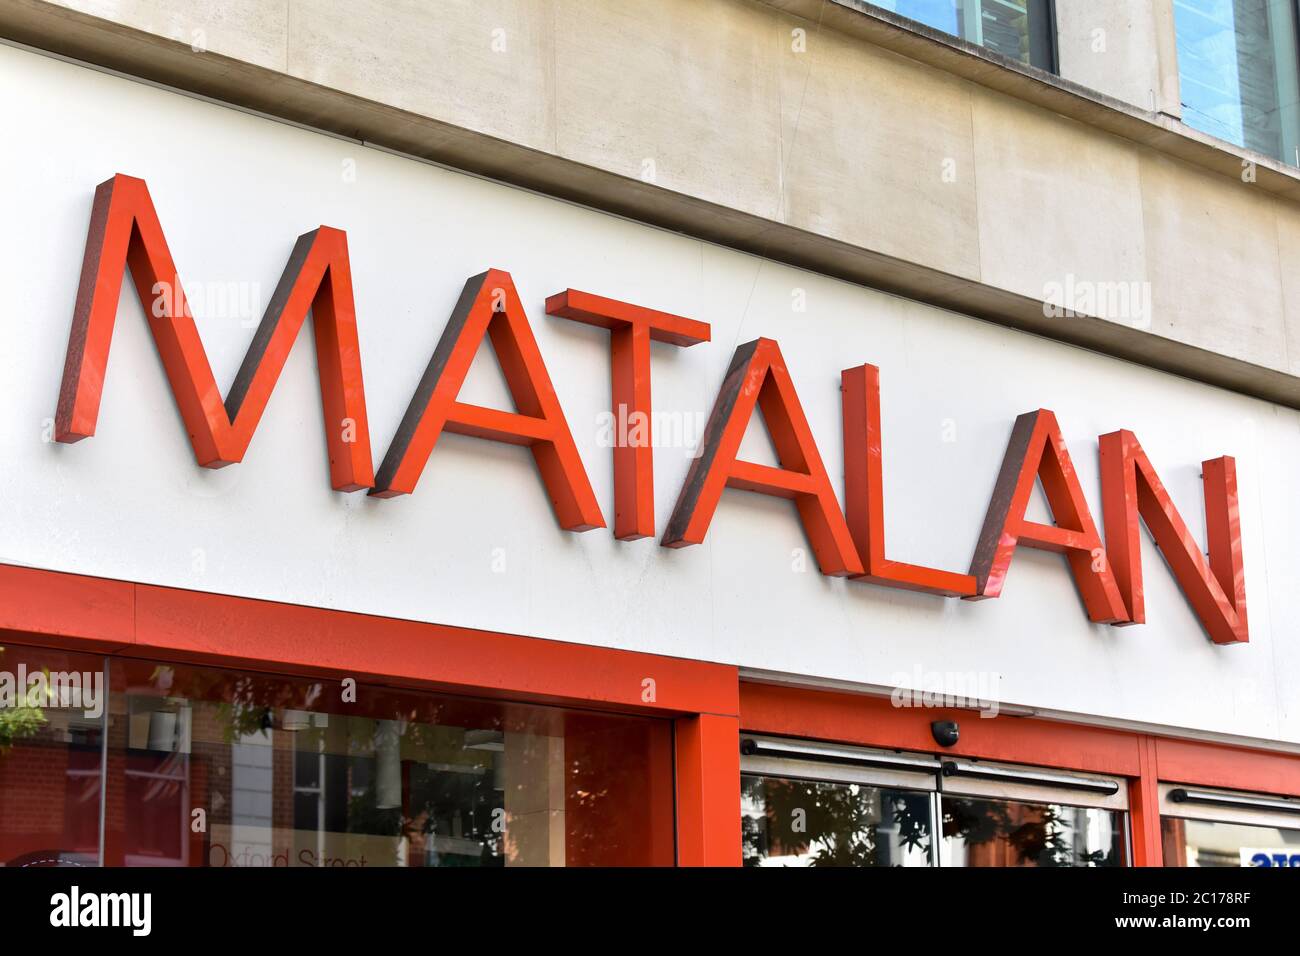 Matalan shop sign in Oxford Street. Stock Photo